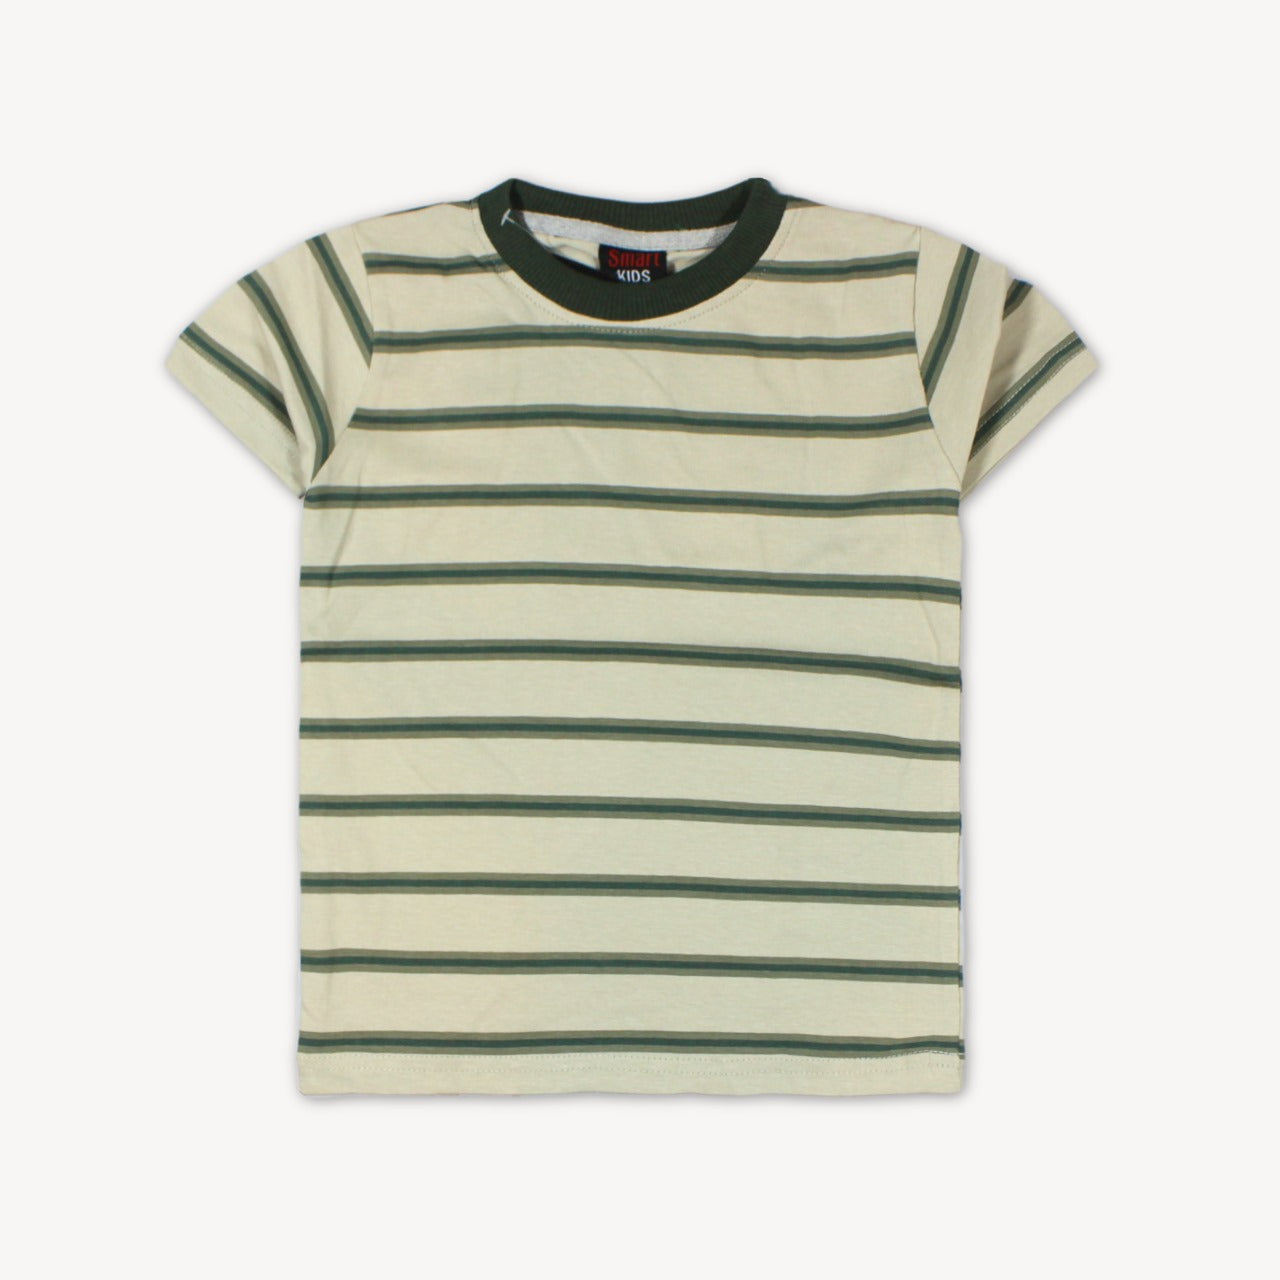 Green & Skin Stripe Printed Cotton T-Shirt